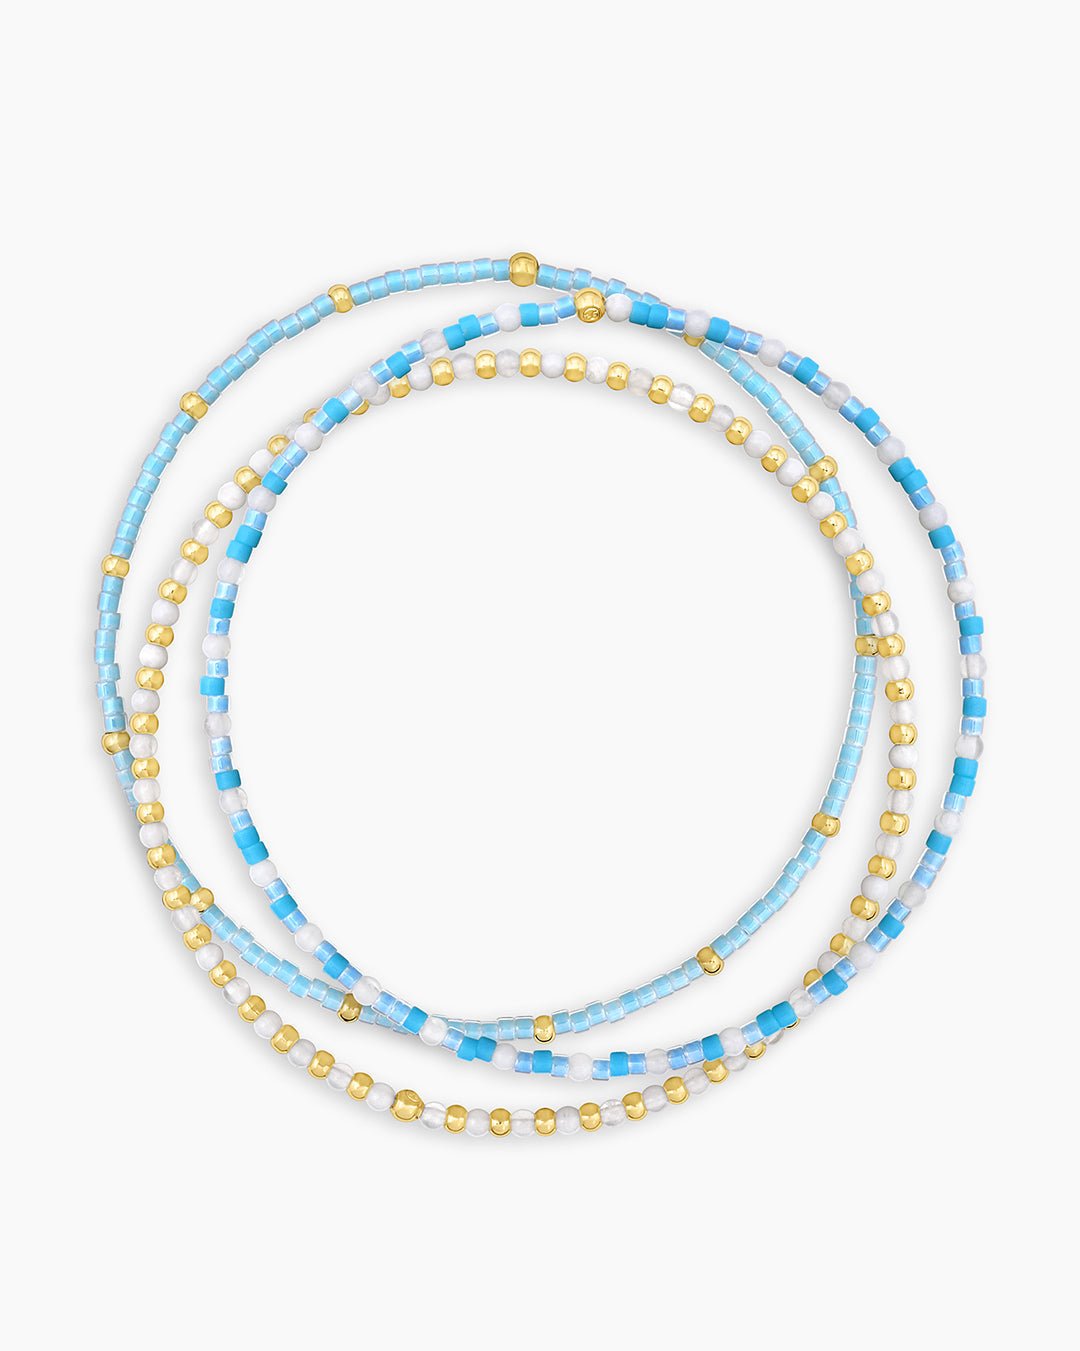 Poppy Gem Bracelet Blue Lace Agate || option::Gold Plated, Blue Lace Agate